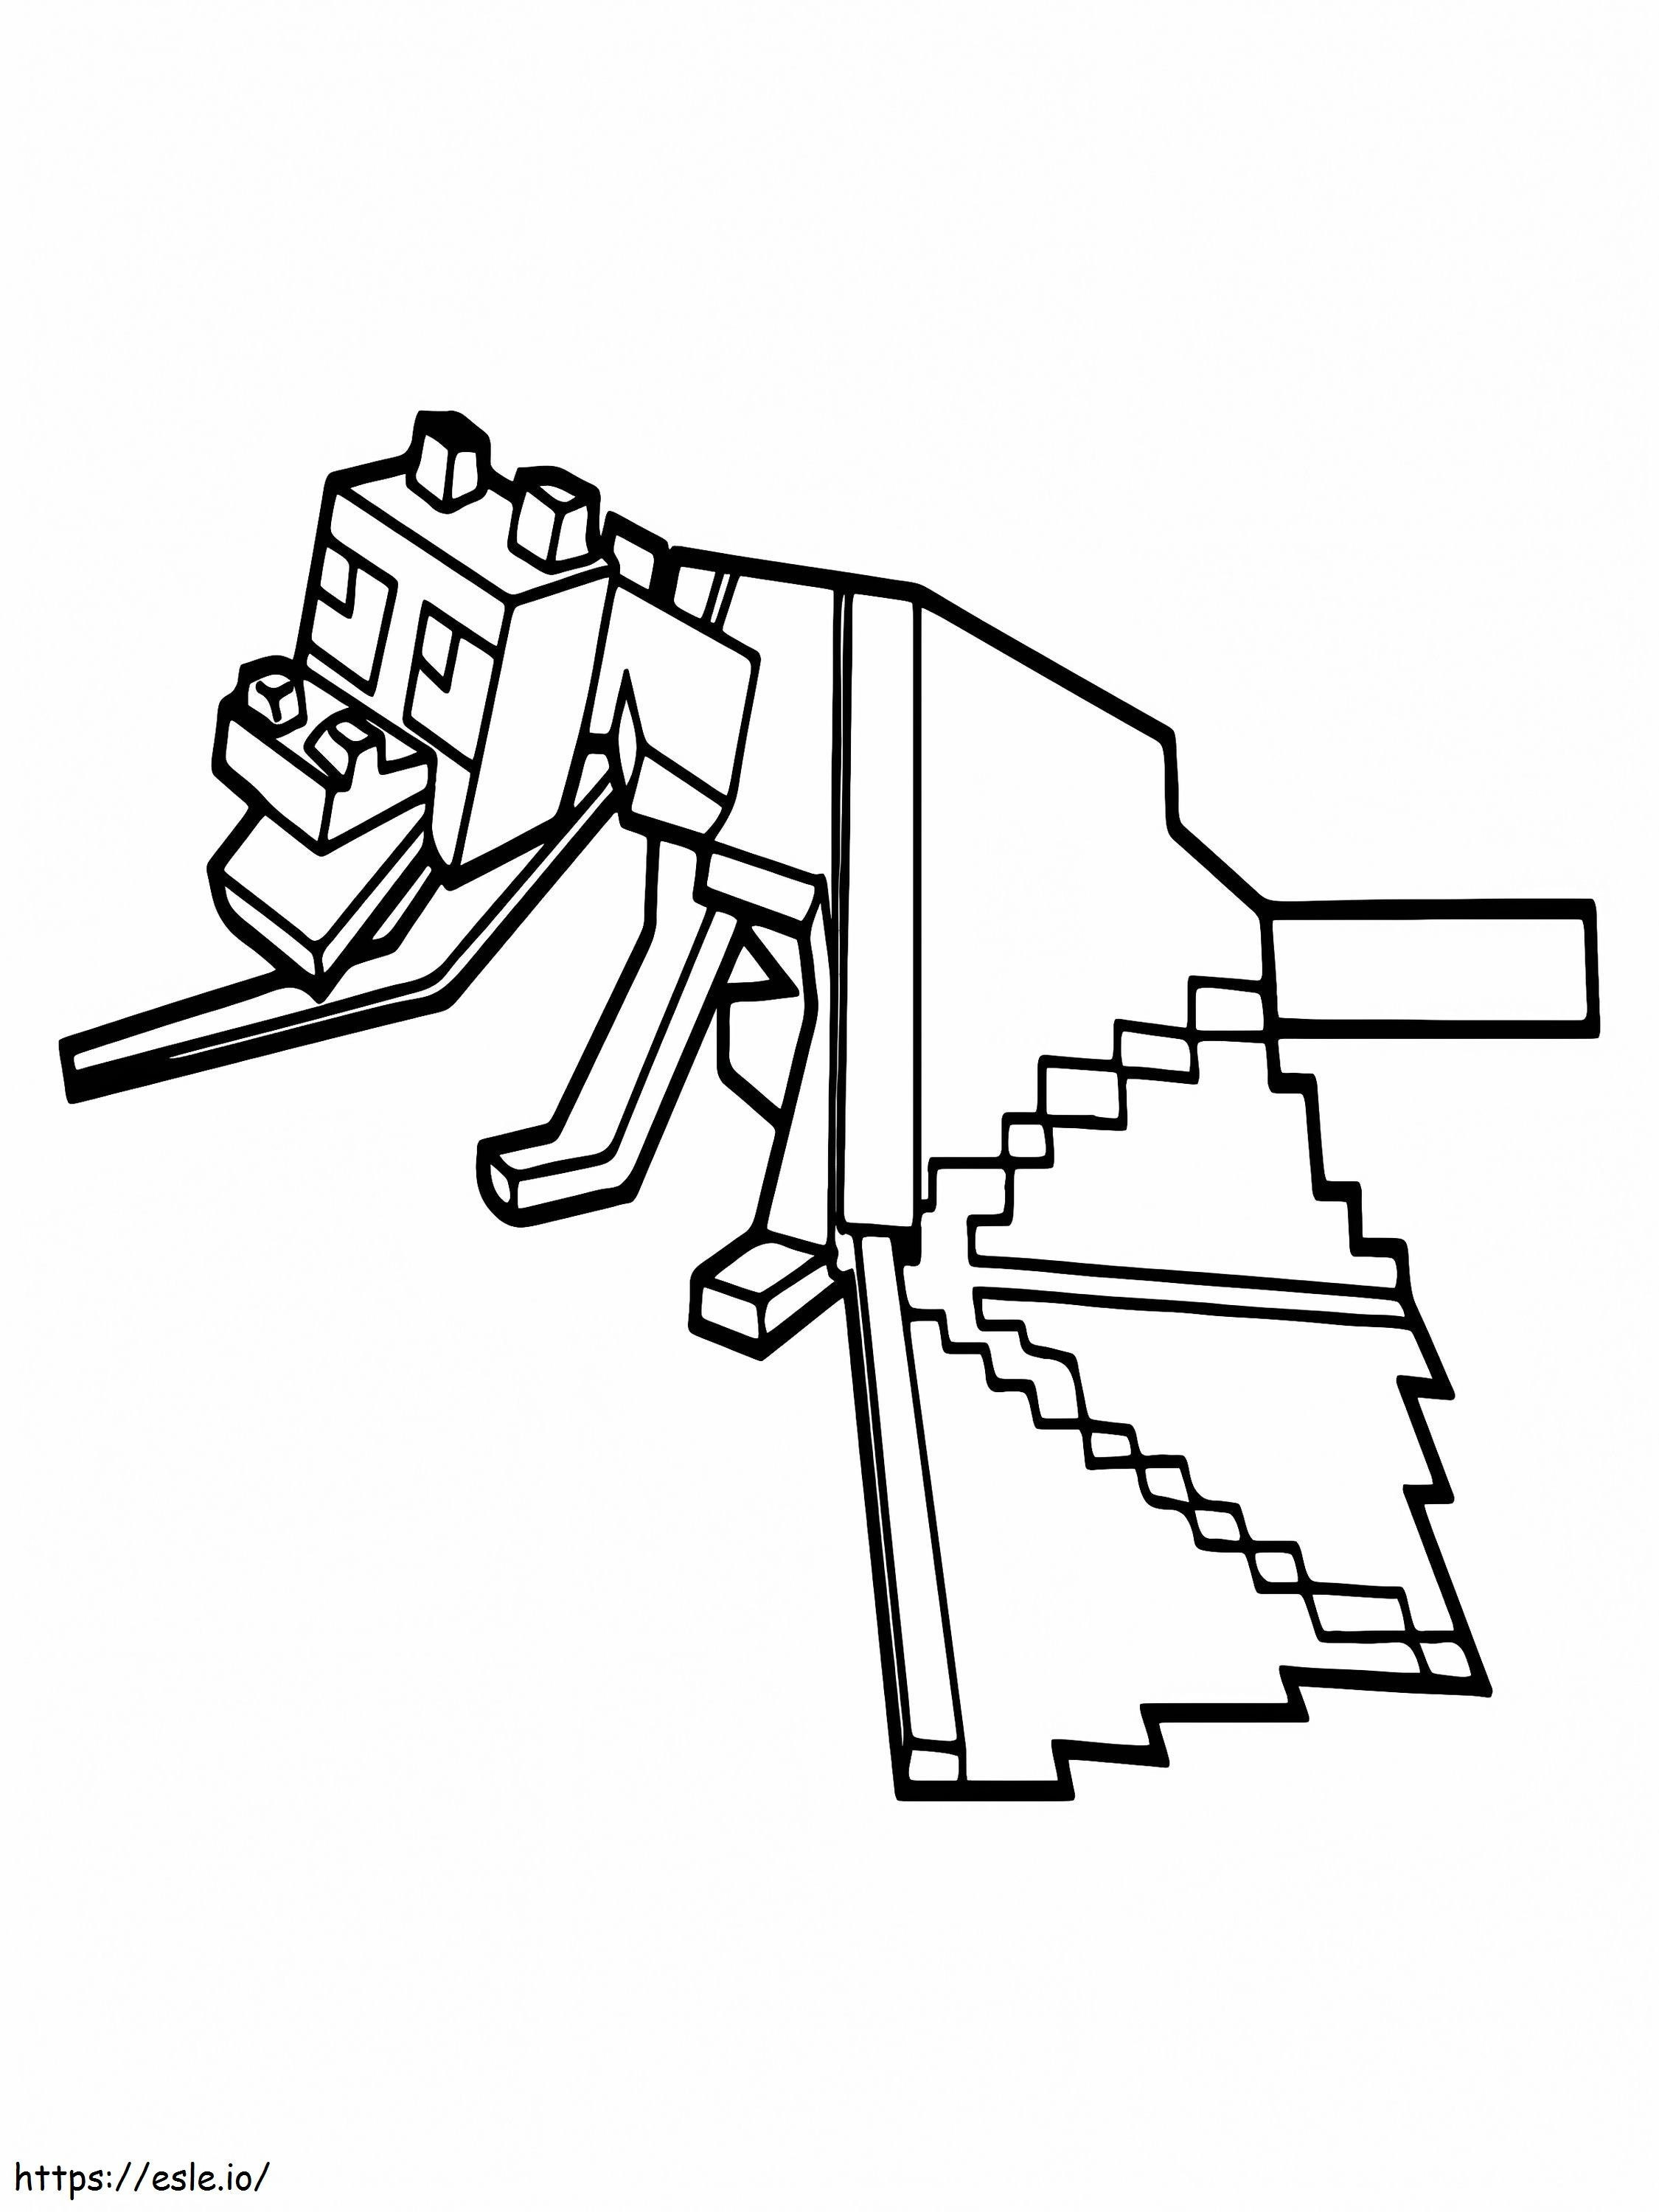 Coloriage Dragon calme de Minecraft à imprimer dessin